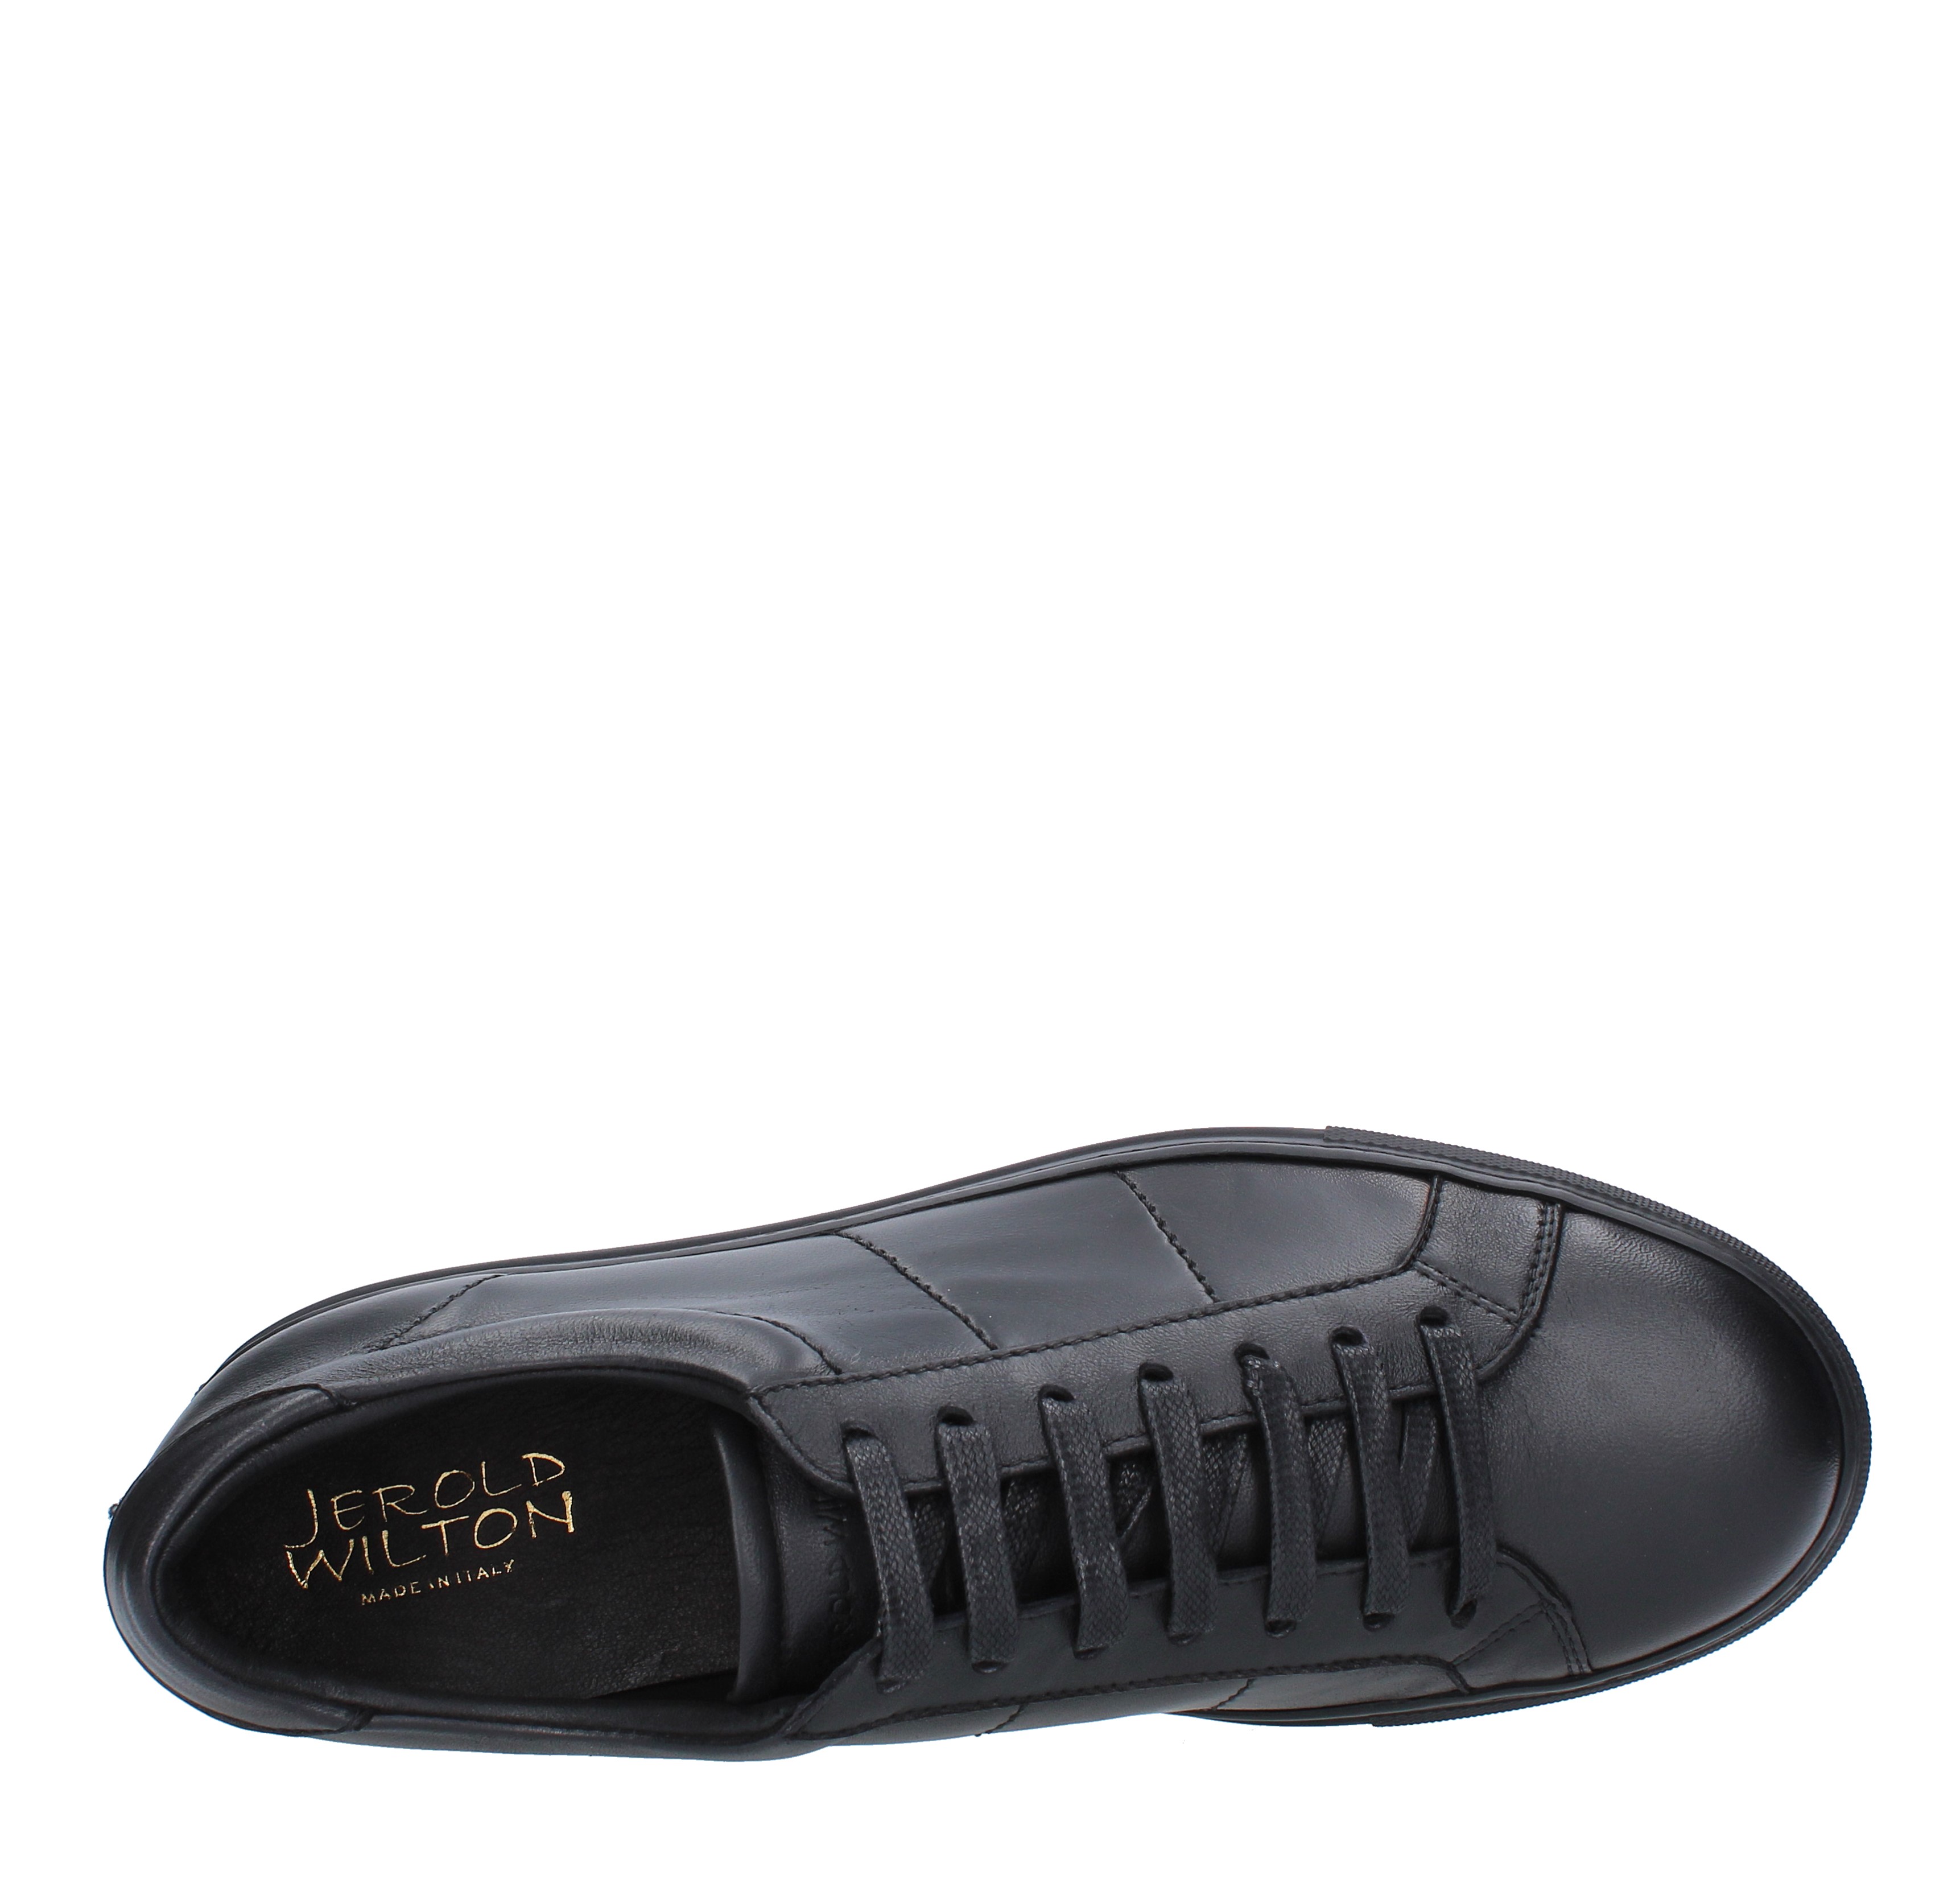 Leather sneakers - JEROLD WILTON - Ginevra calzature